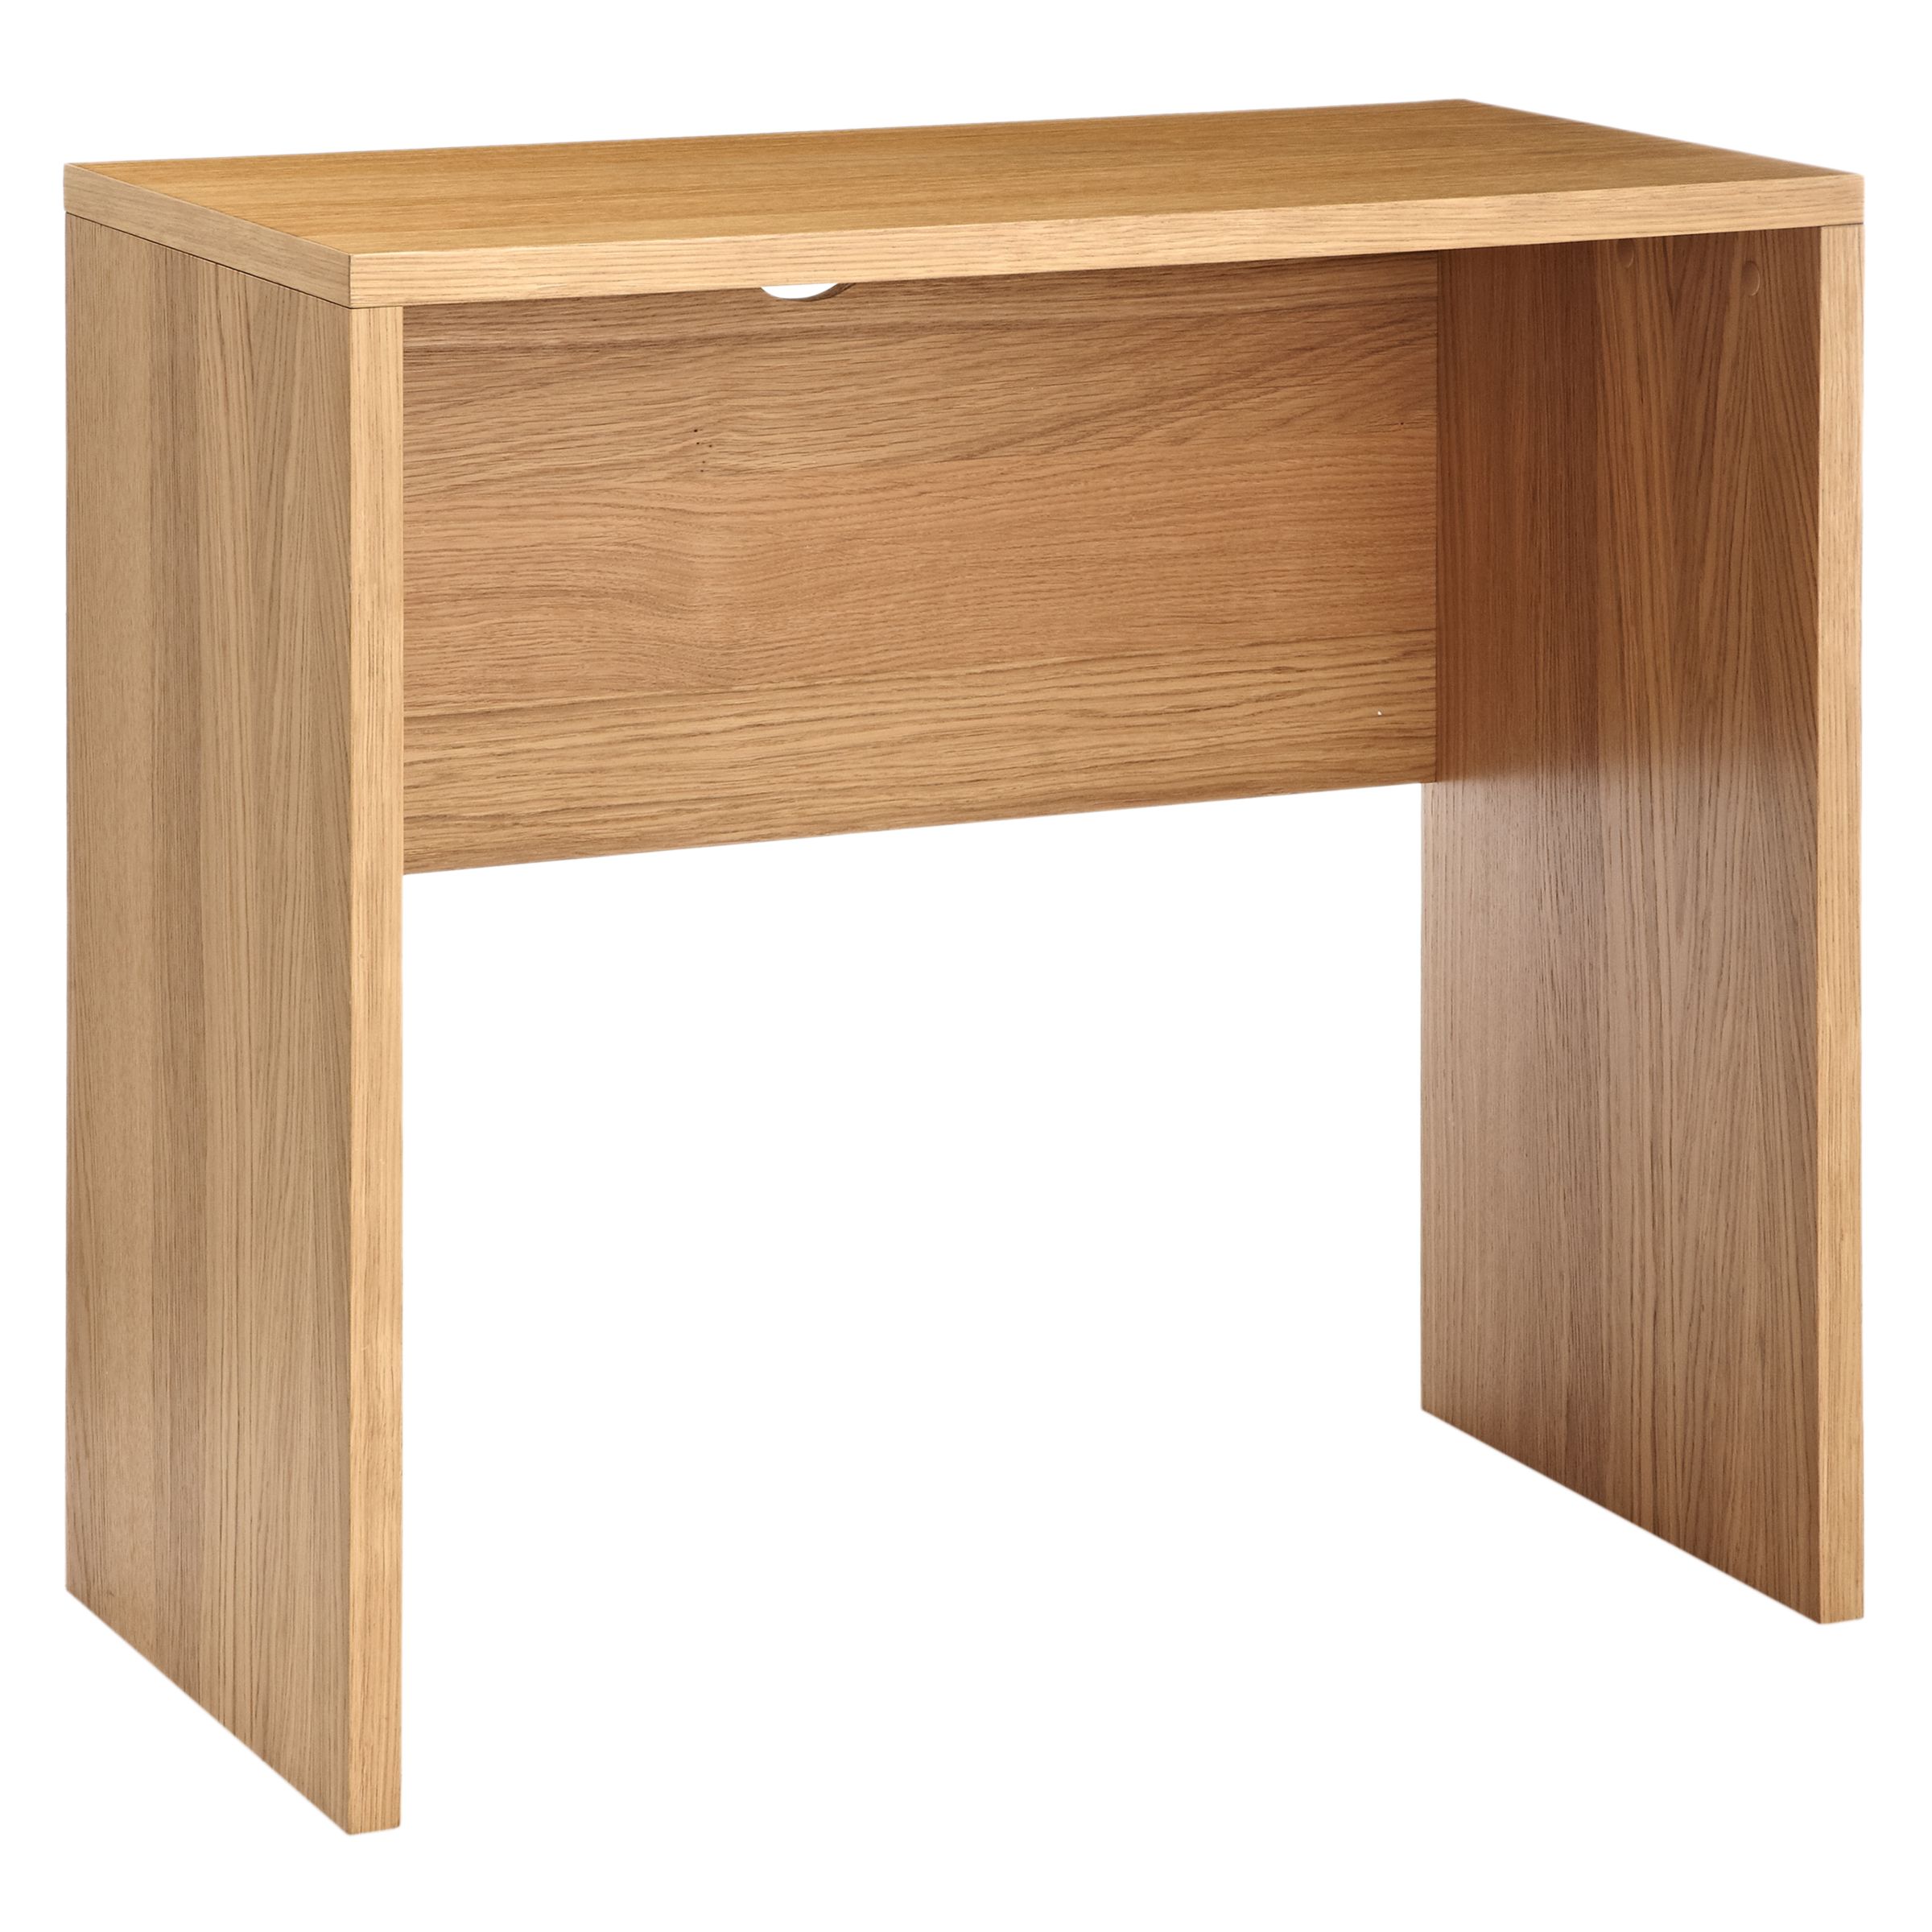 John Lewis Partners Abacus Small Desk Fsc Certified Oak At